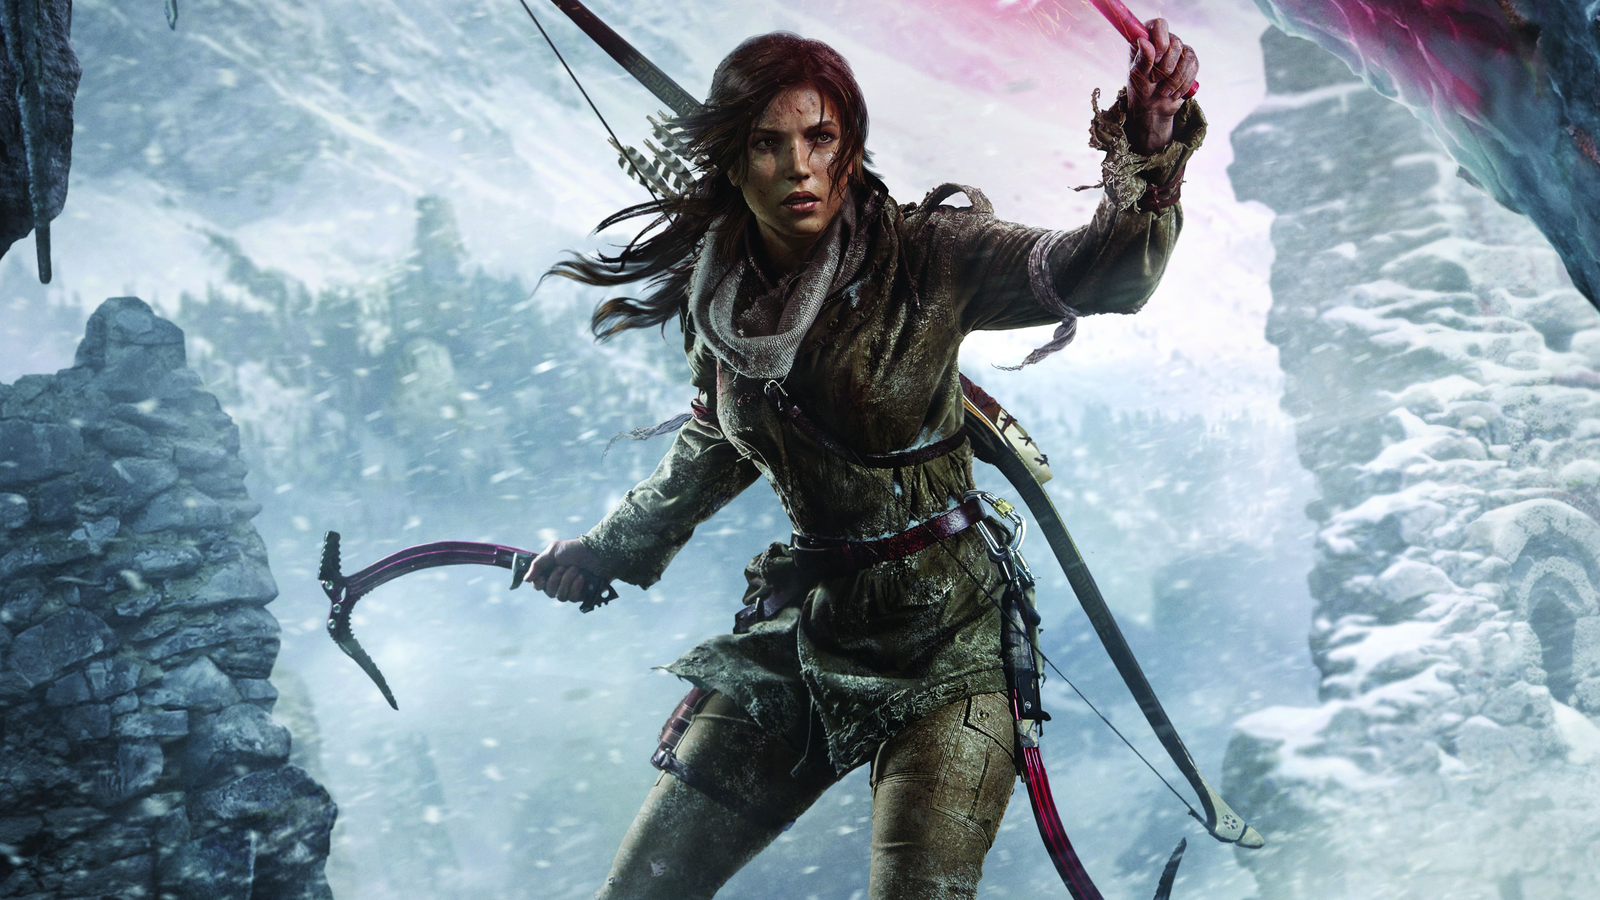 Rise of the Tomb Raider brings back Lara's sense of adventure